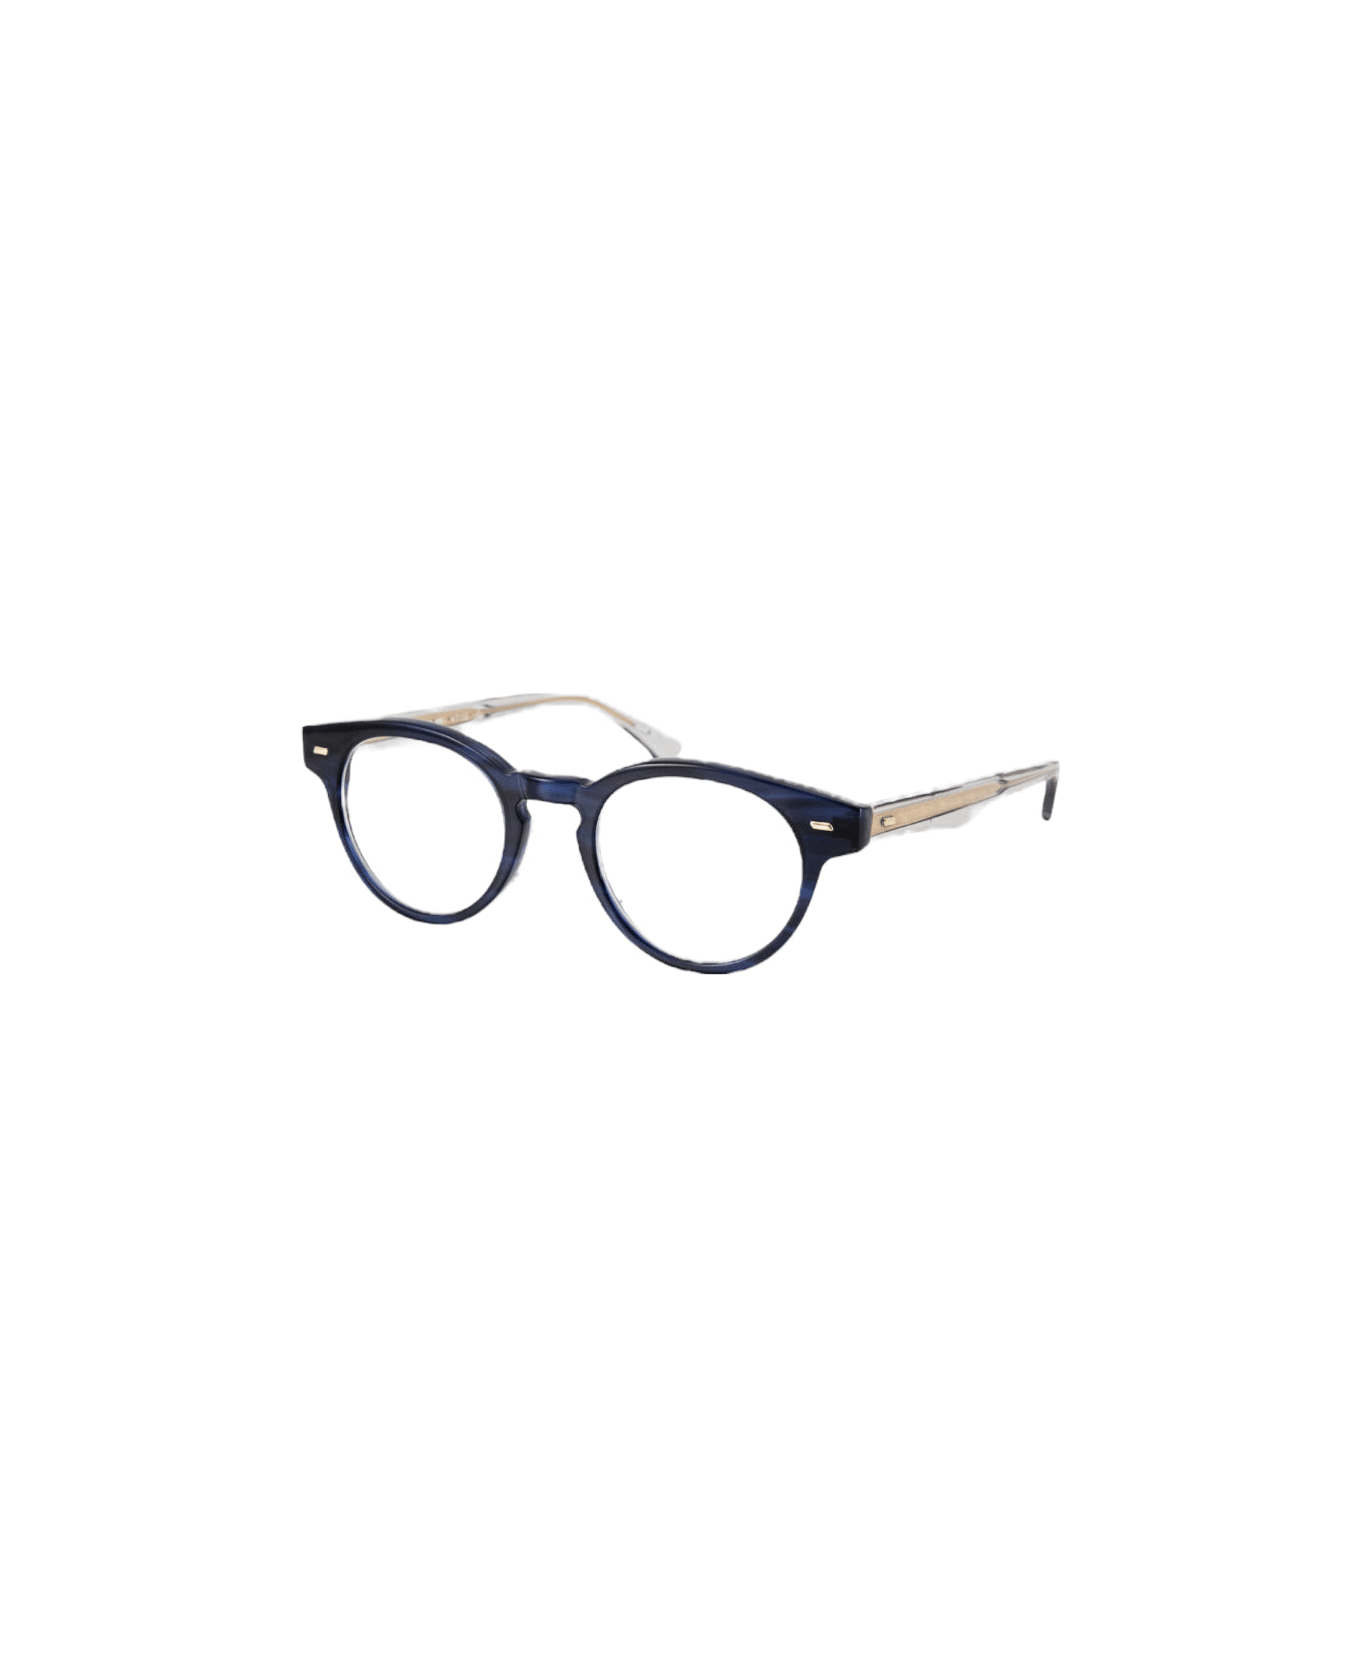 Masunaga 072 - Blue Navy Glasses